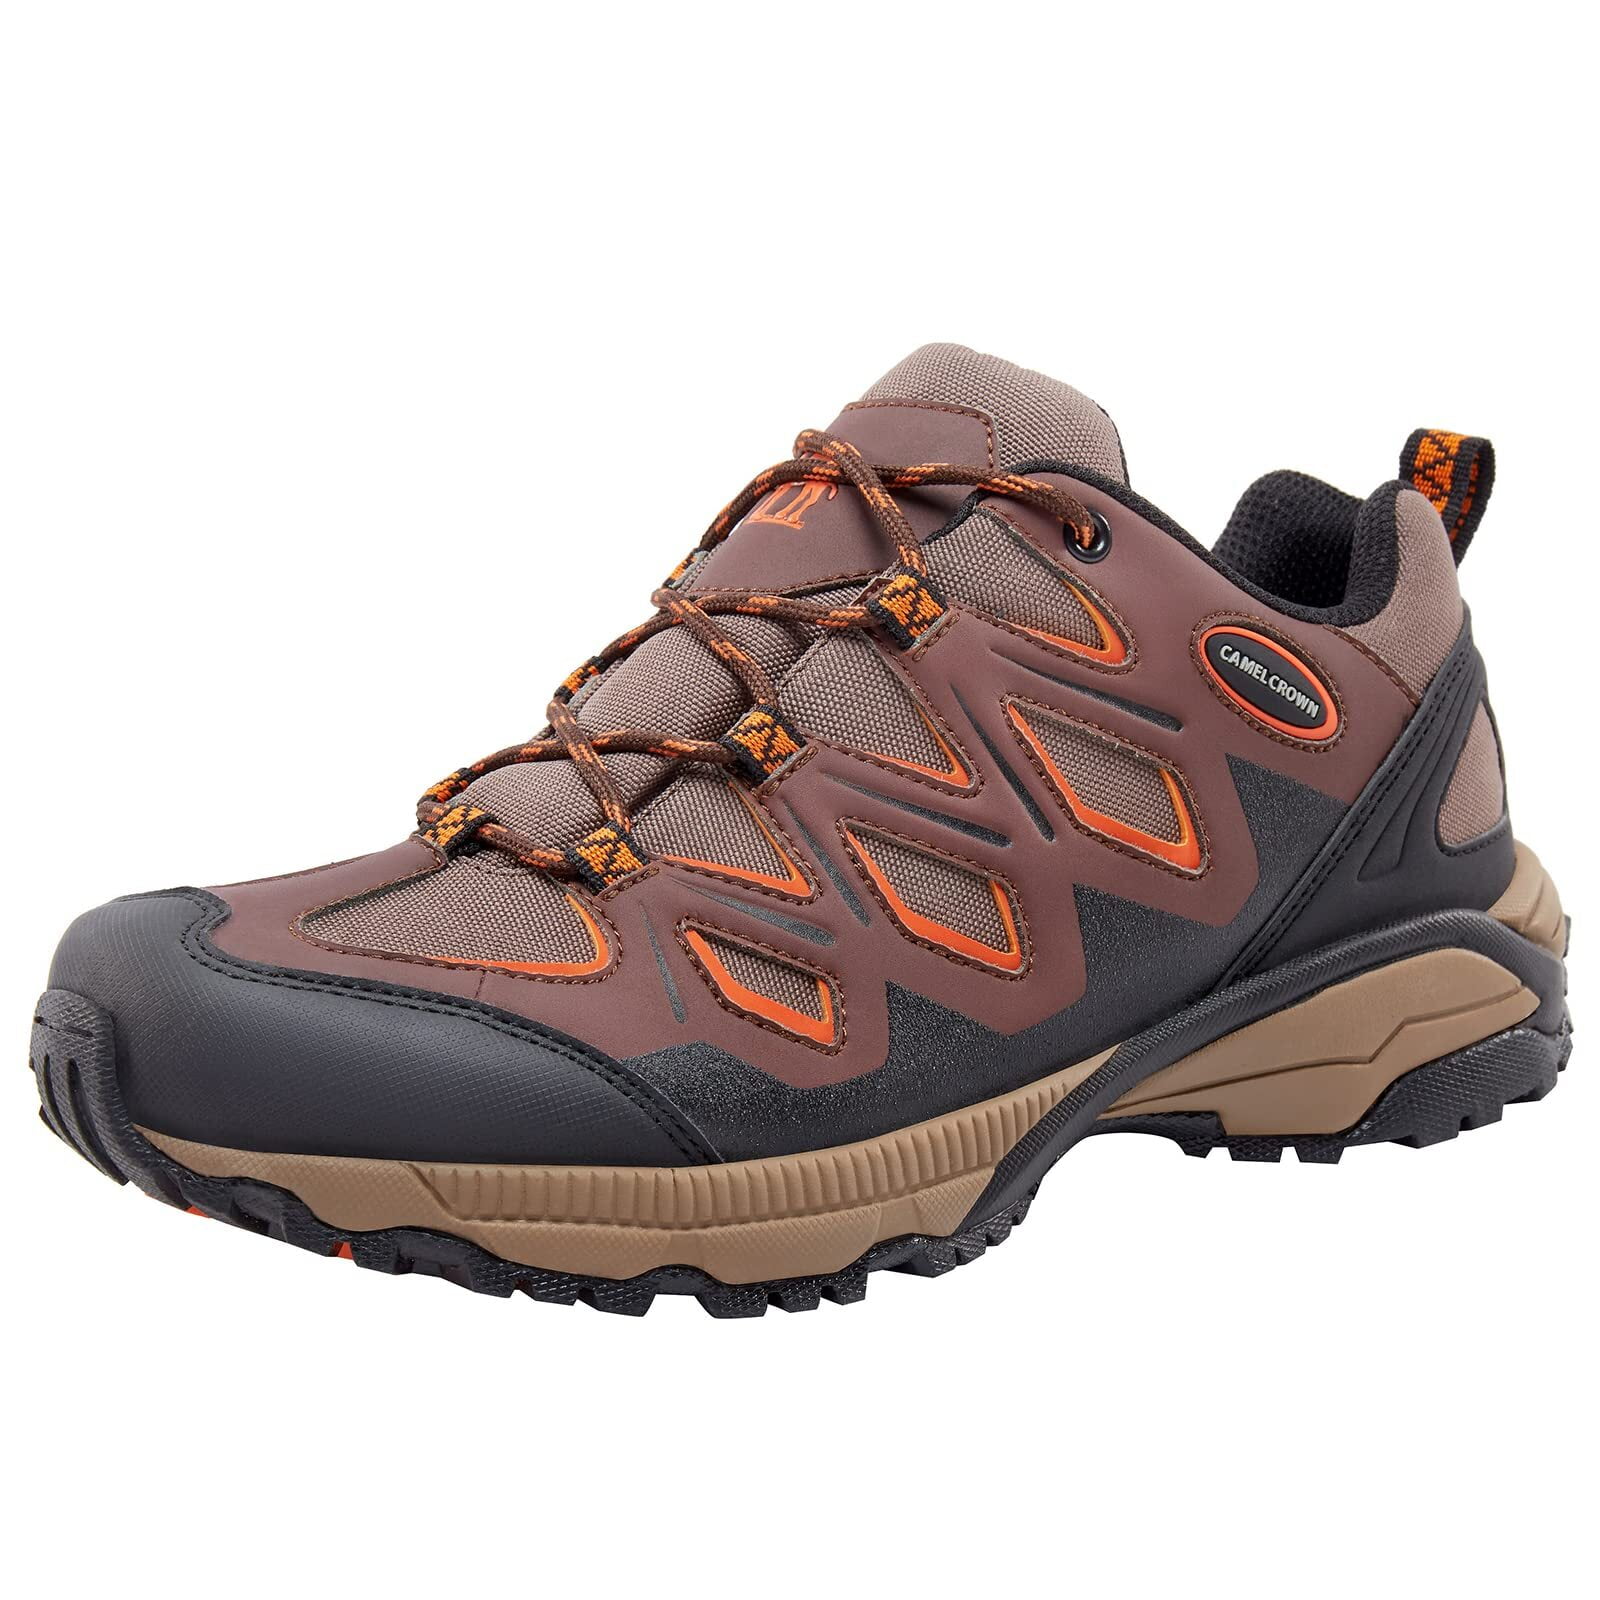 CAMEL CROWN Men's Hiking Shoes Lightweight Slip-Resistant Walking ...